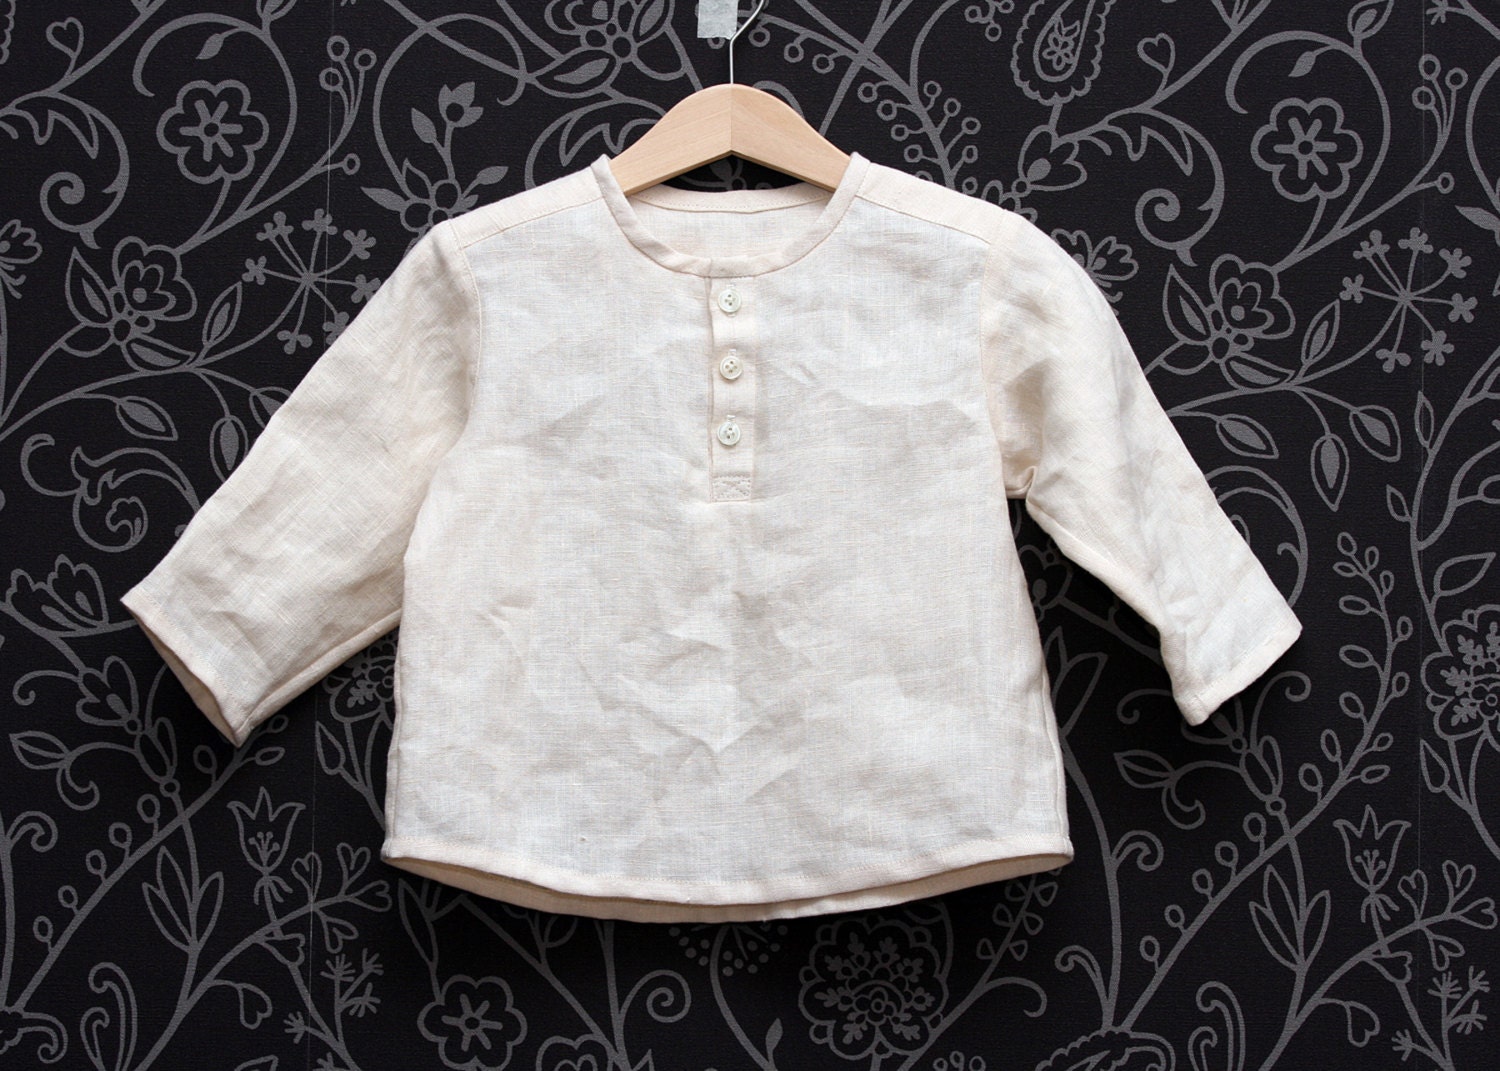 Natural linen boys shirt, wedding shirt, Eco friendly, Boho top in beige color // size US 1-6 (EU 80-116) - ZanziBach